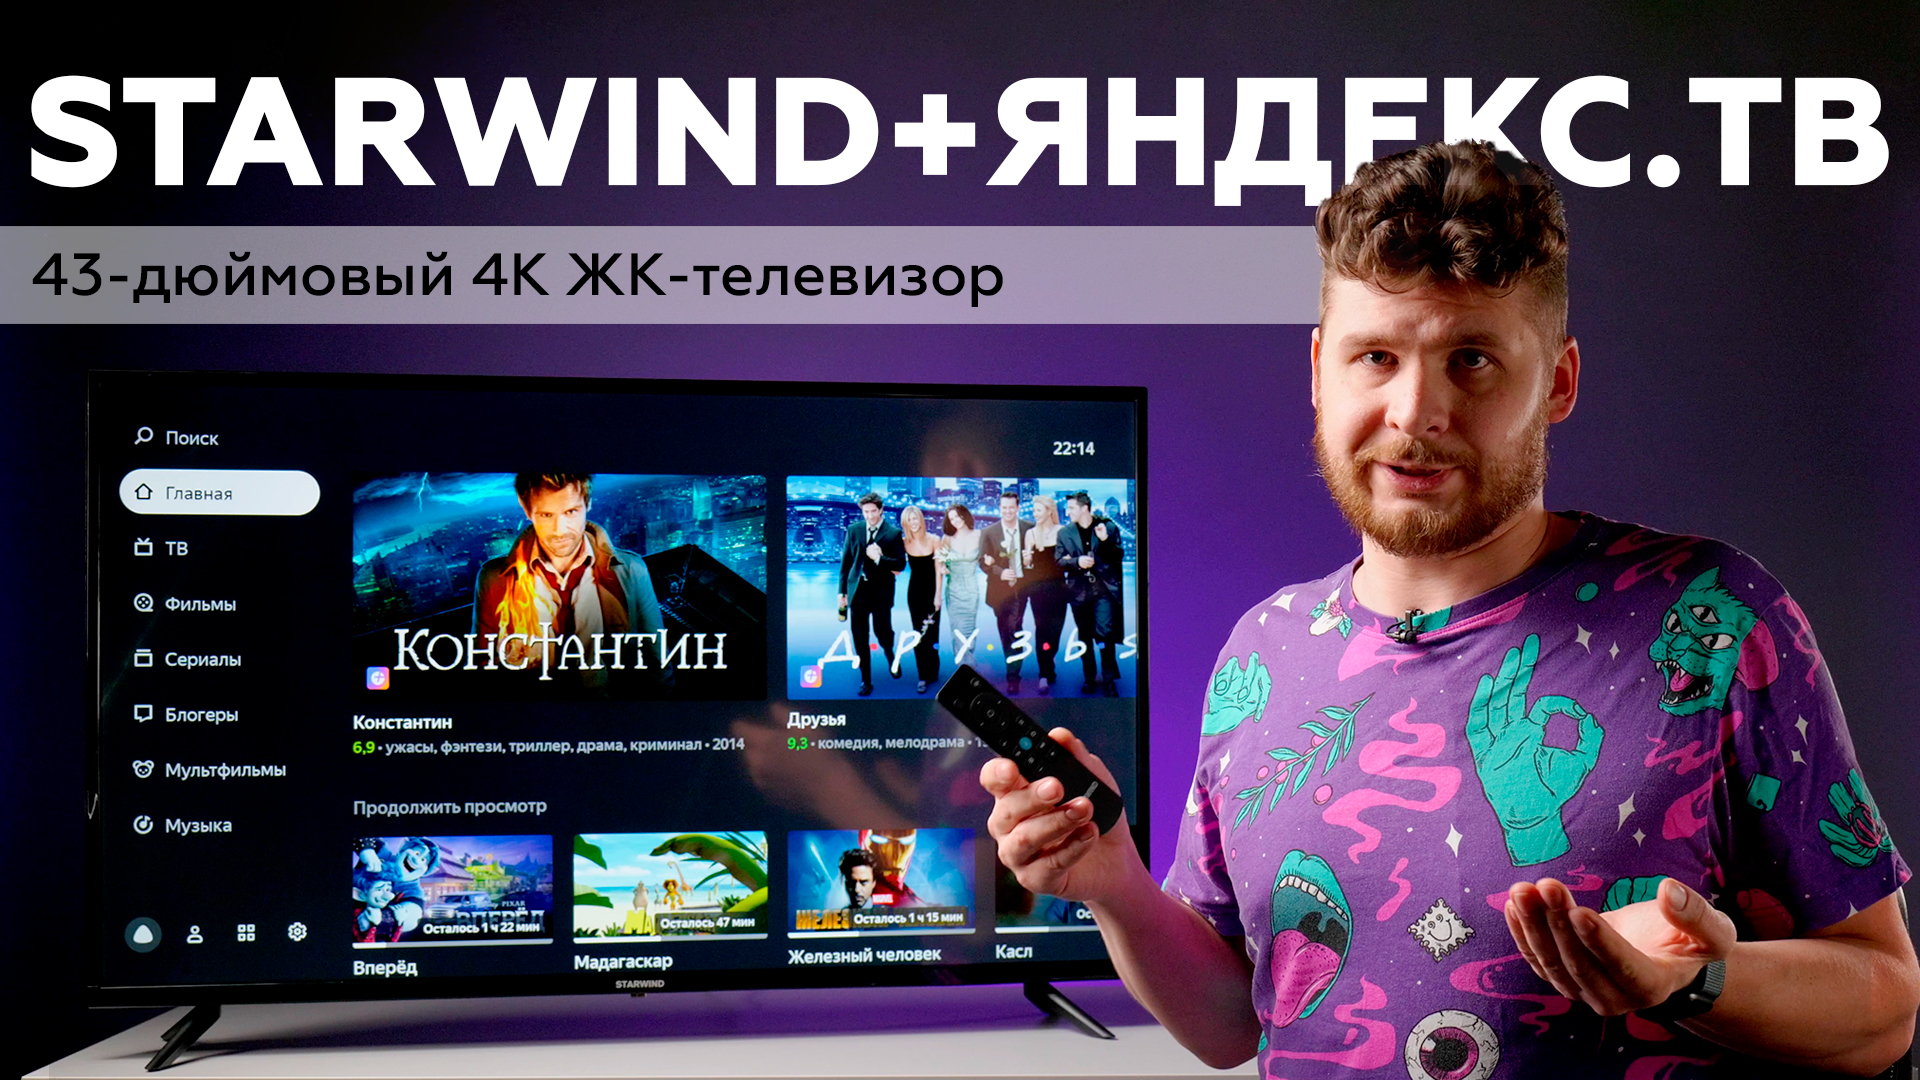 Обзор 43-дюймового 4К ЖК-телевизора Starwind SW-LED43UB400 на платформе Яндекс.ТВ